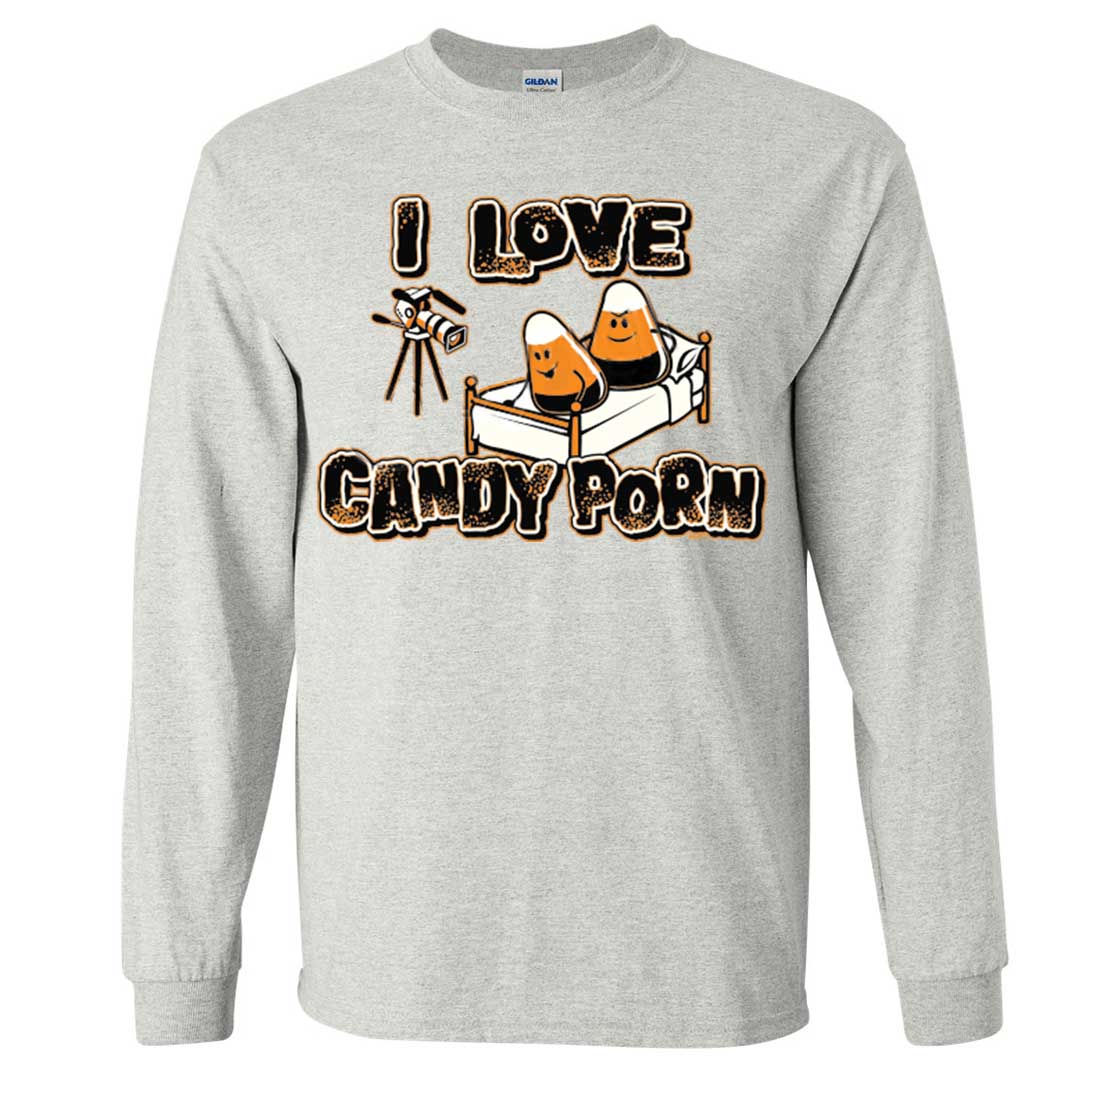 I Love Candy Porn Long Sleeve Shirt - California Republic Clothes